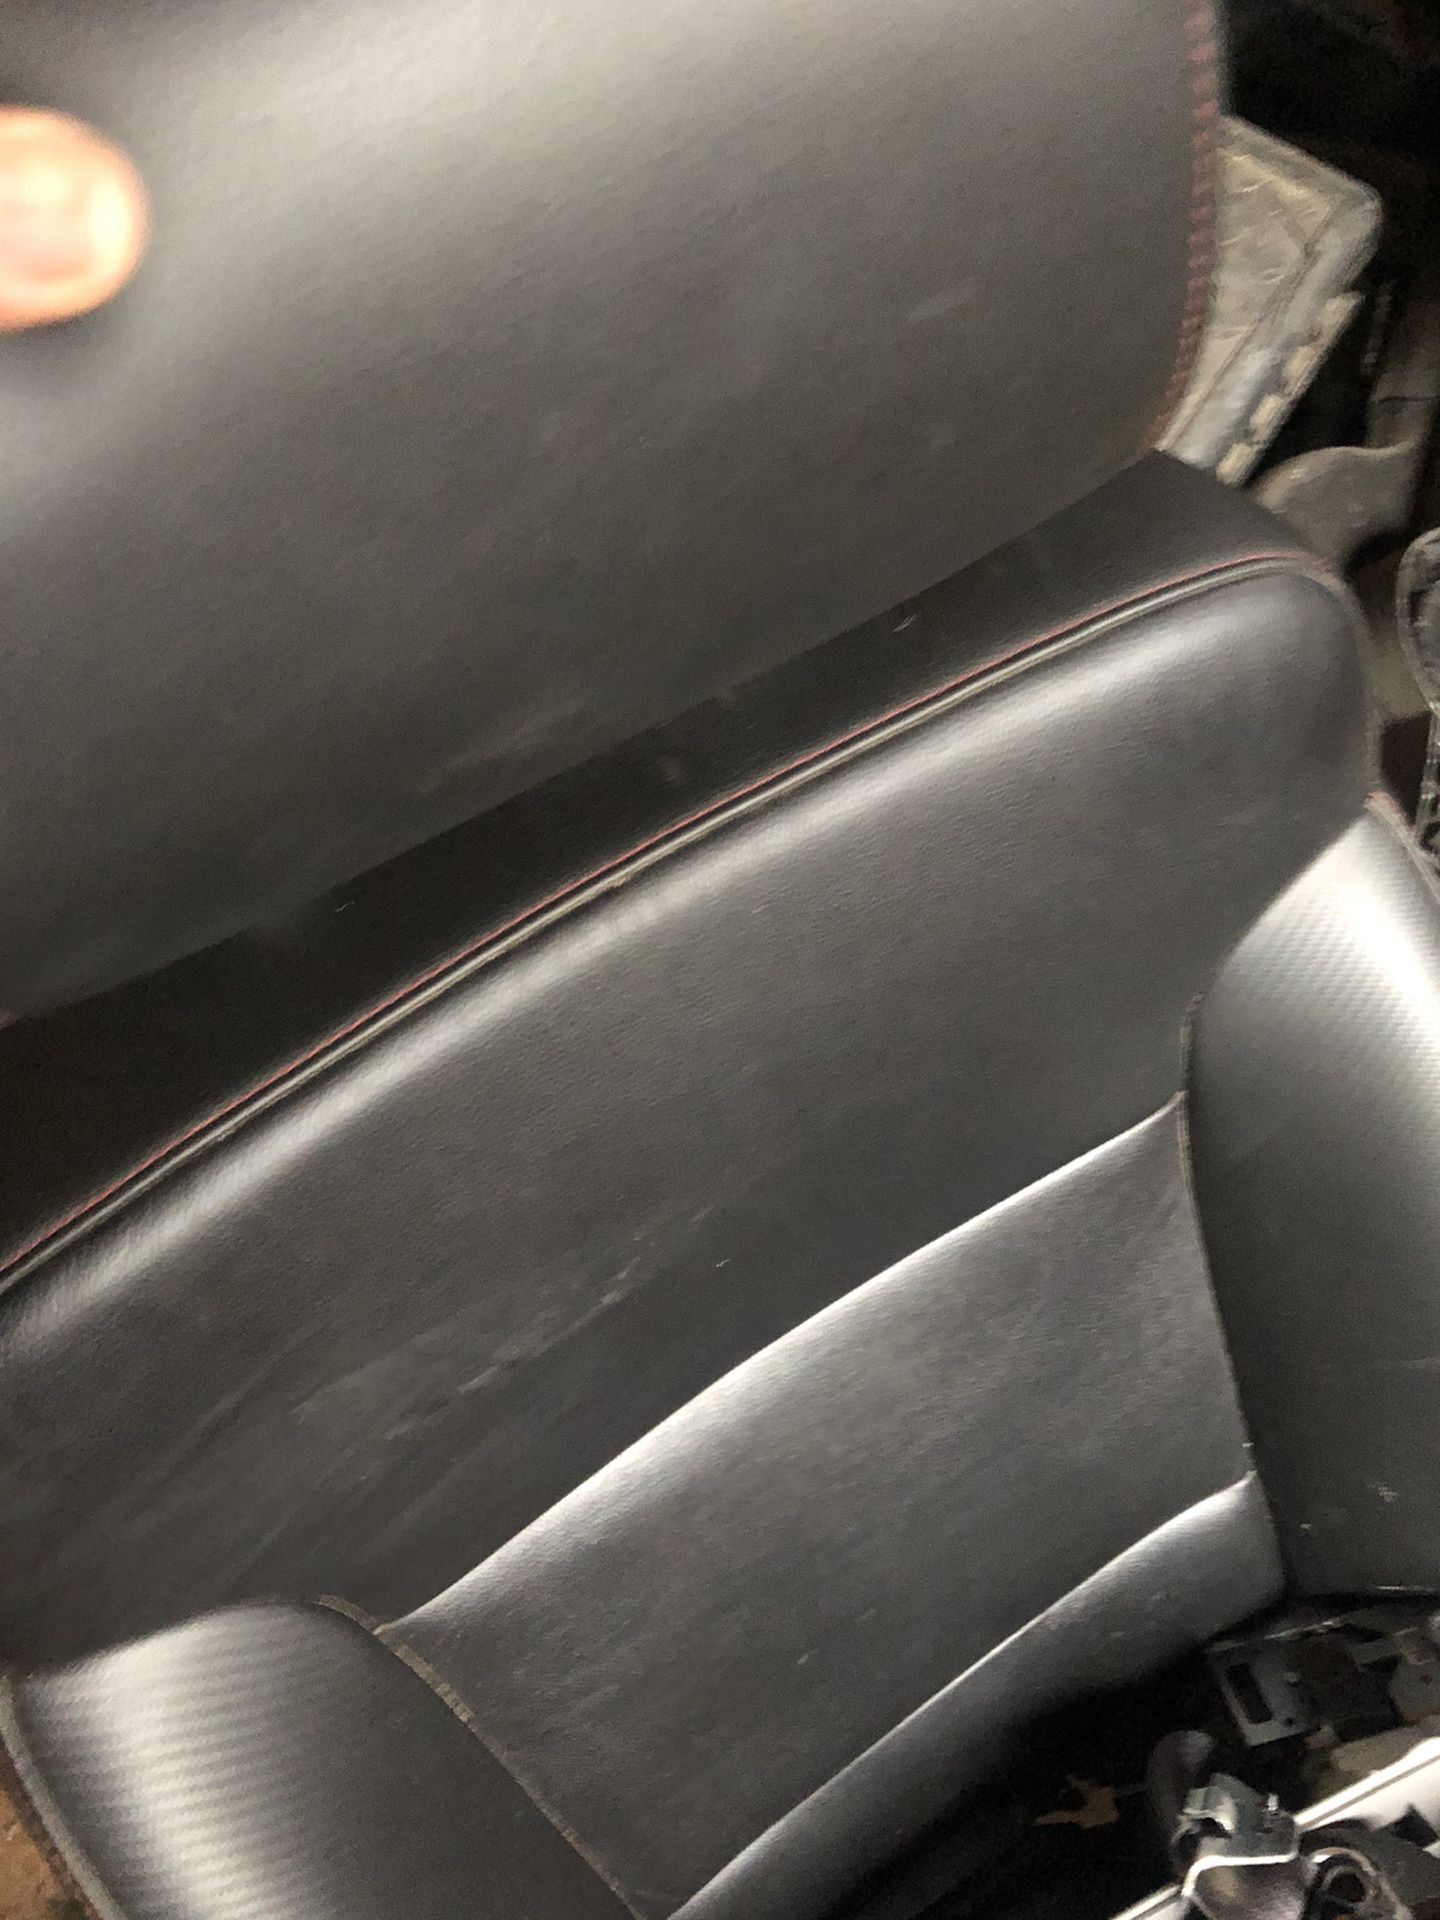 2014 2018 Chevrolet truck seats complete with door panels and carpet